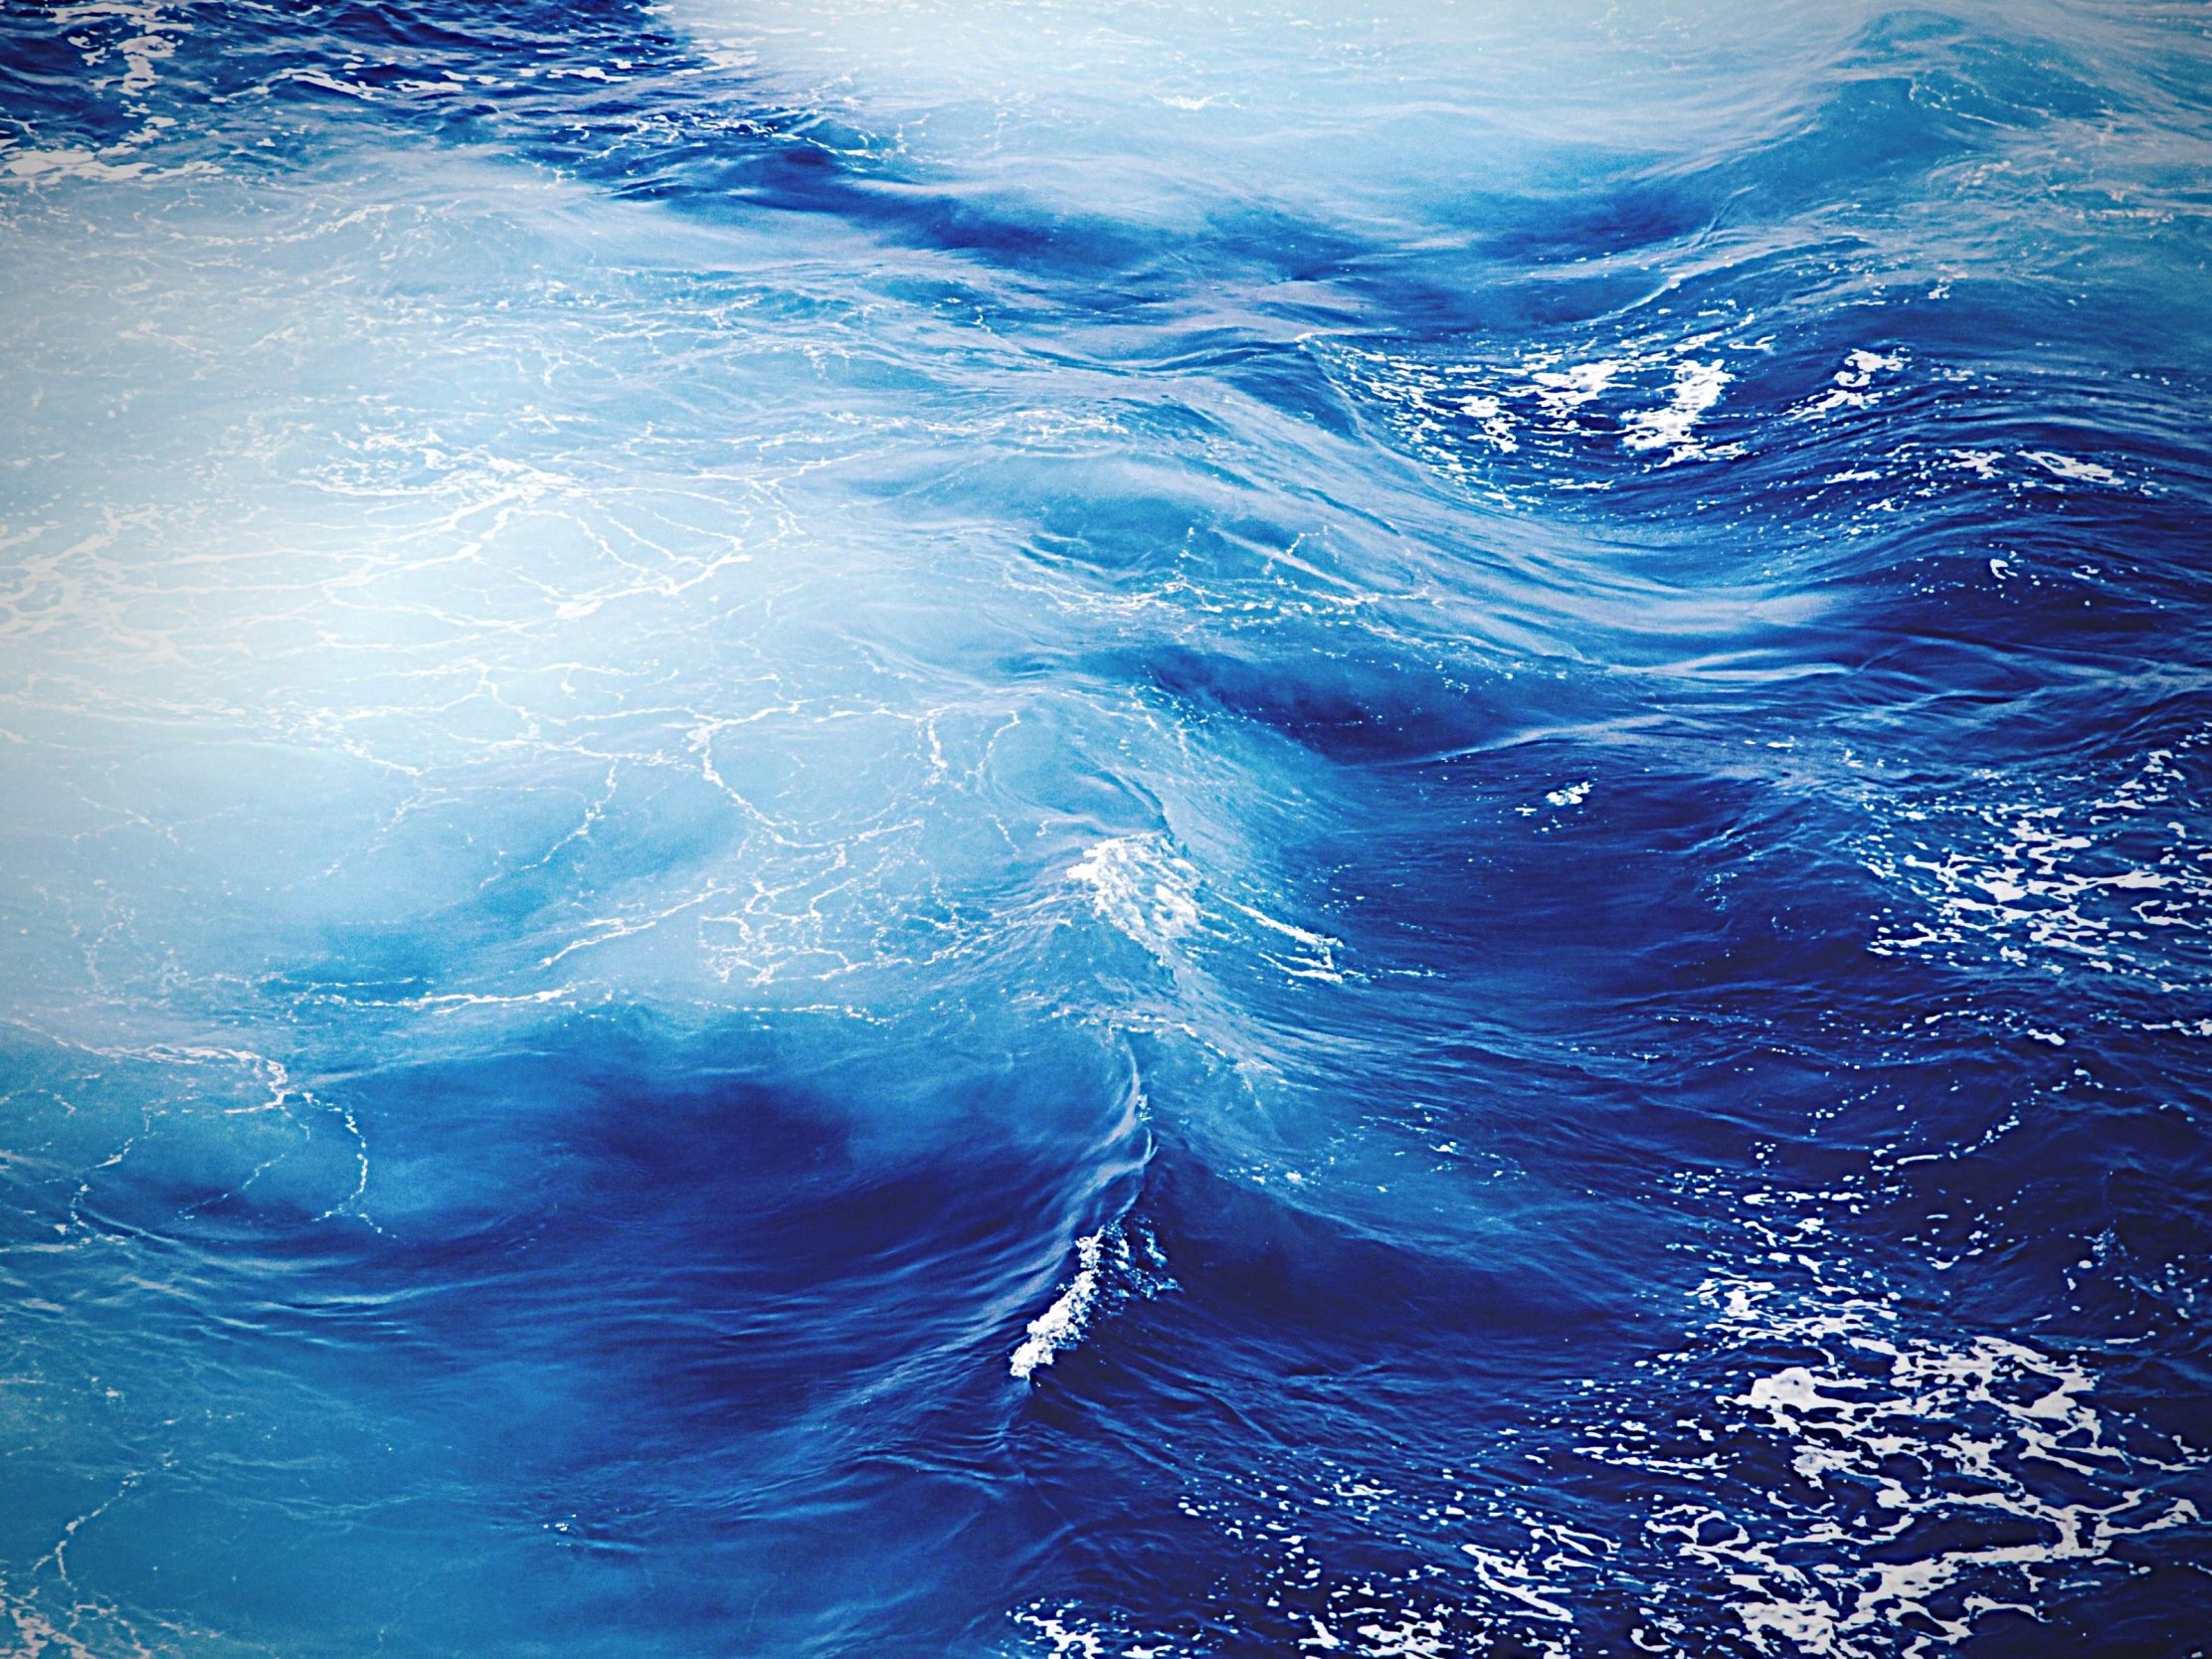 2224x1668 iPad Pro wallpapers Ocean Sea Water Wave Blue iPad Wallpaper 2224x1668 pixels resolution